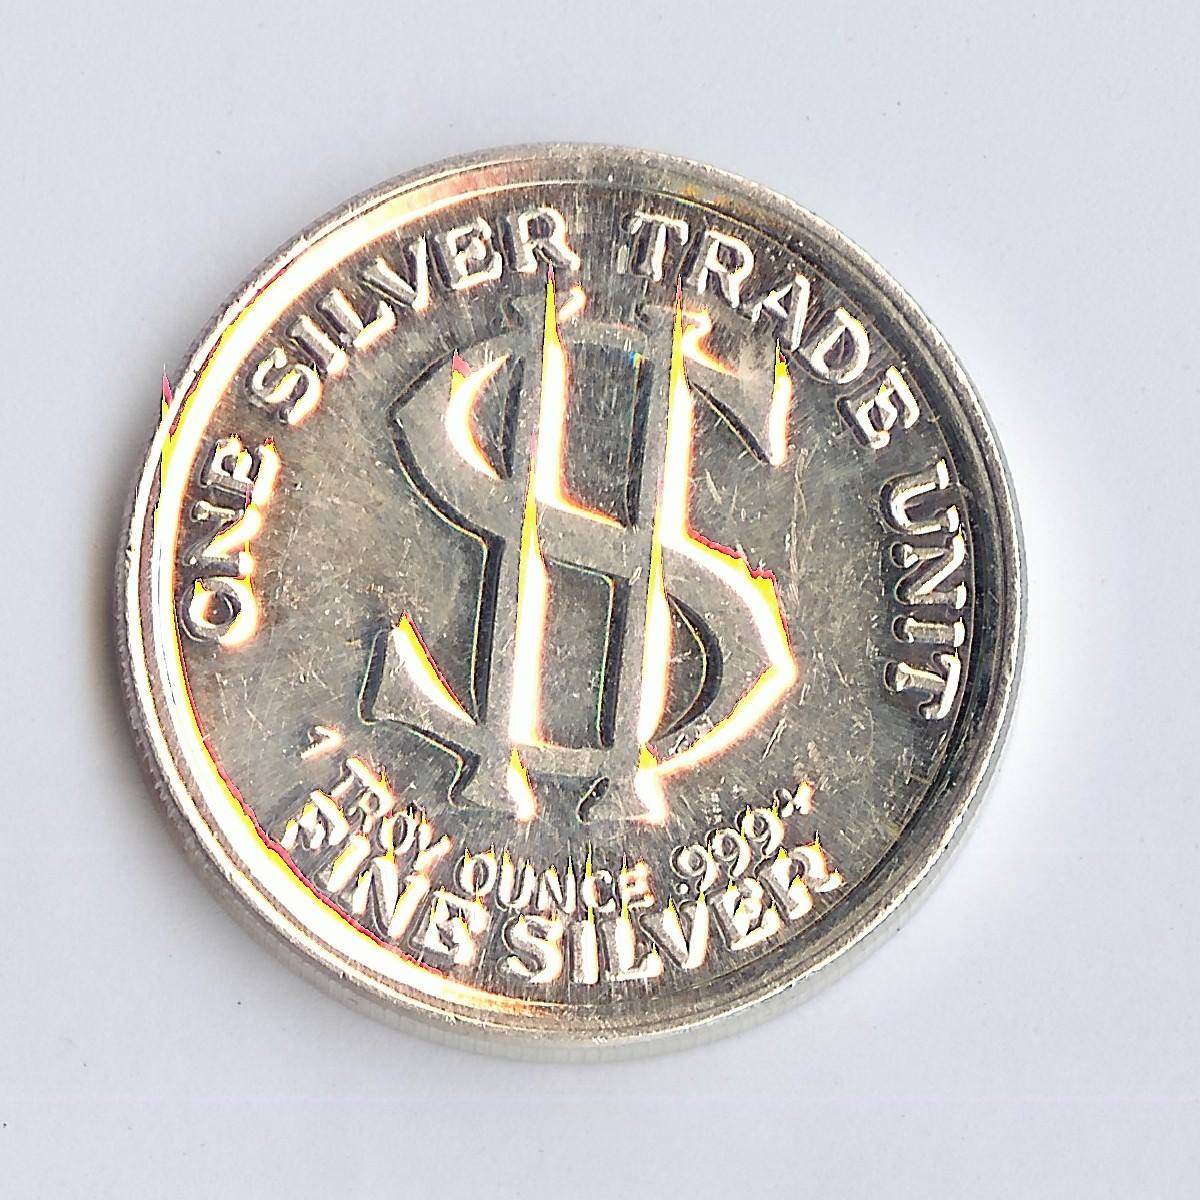 Монеты со знаком. Монета со знаком доллара. Монета с двойным знаком доллара. Песо и доллар знак. Значок цента доллара.